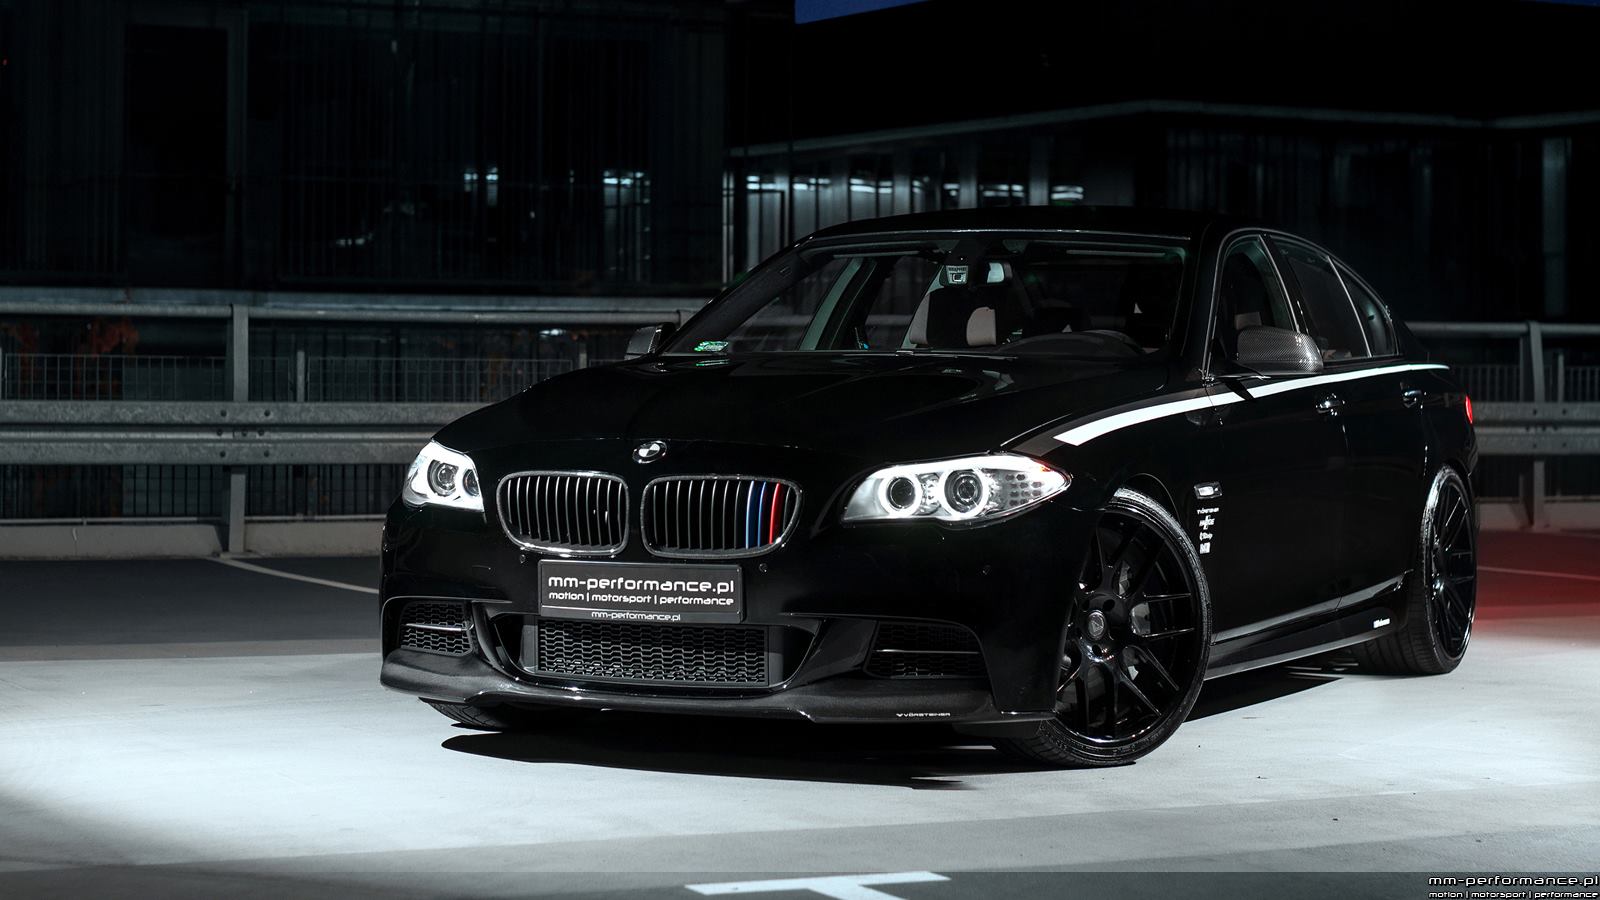 BMW представила 400-сильную дизельную «пятерку»